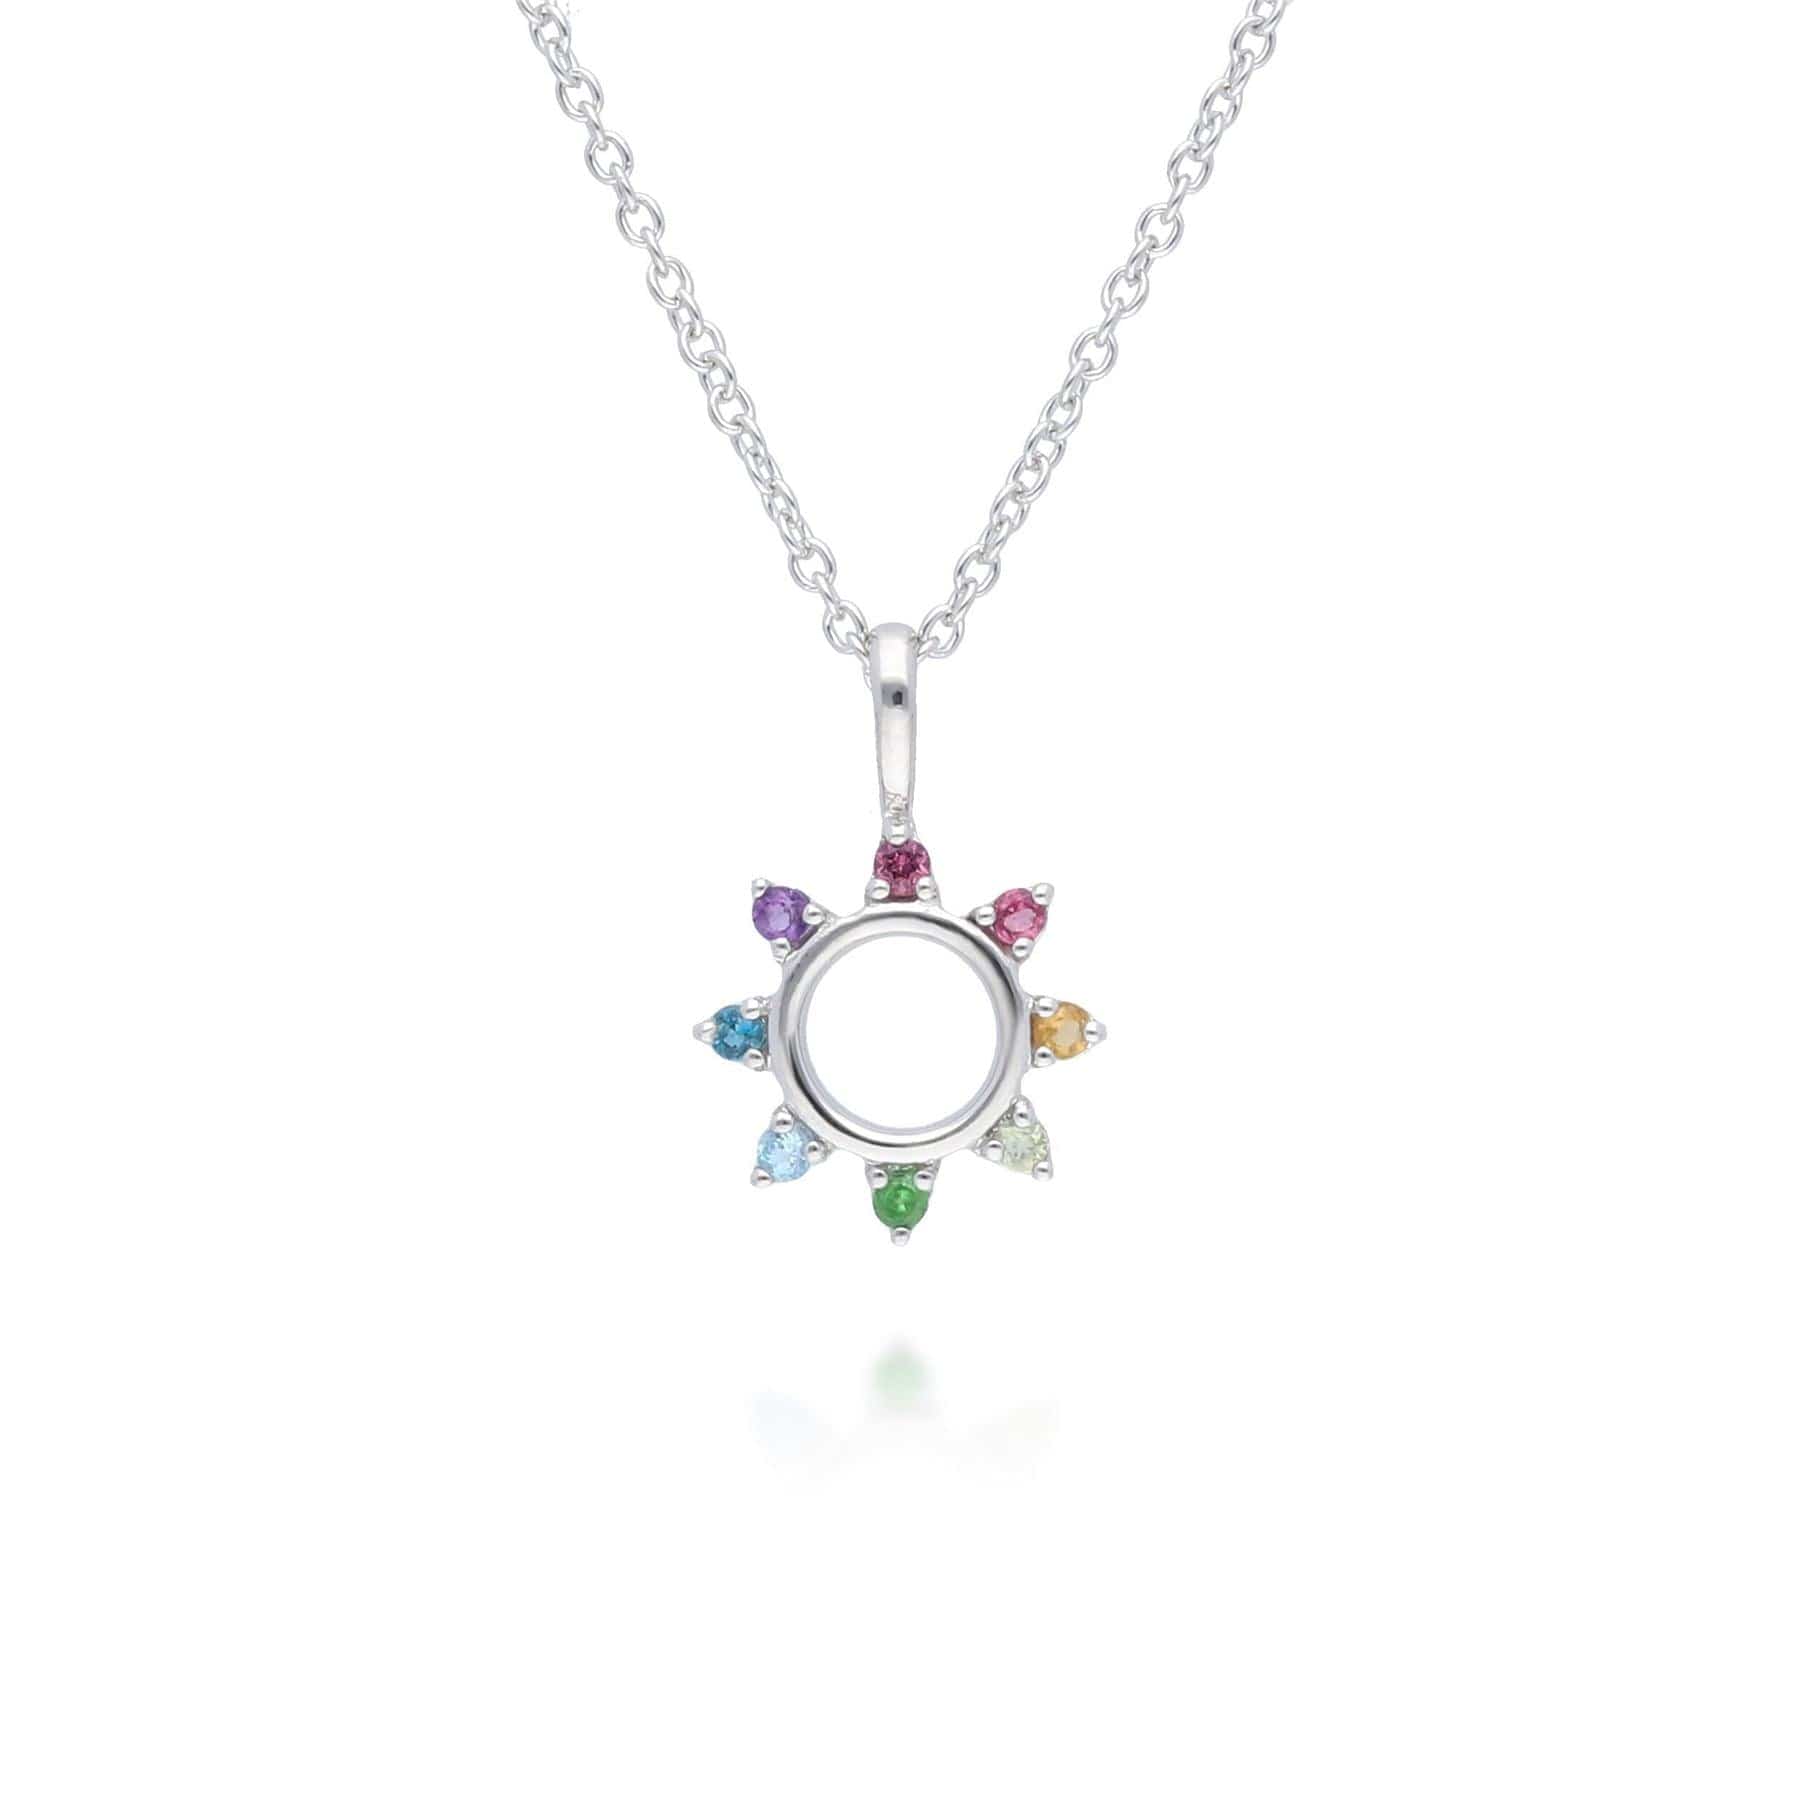 Rainbow Sunburst Necklace in 925 Sterling Silver